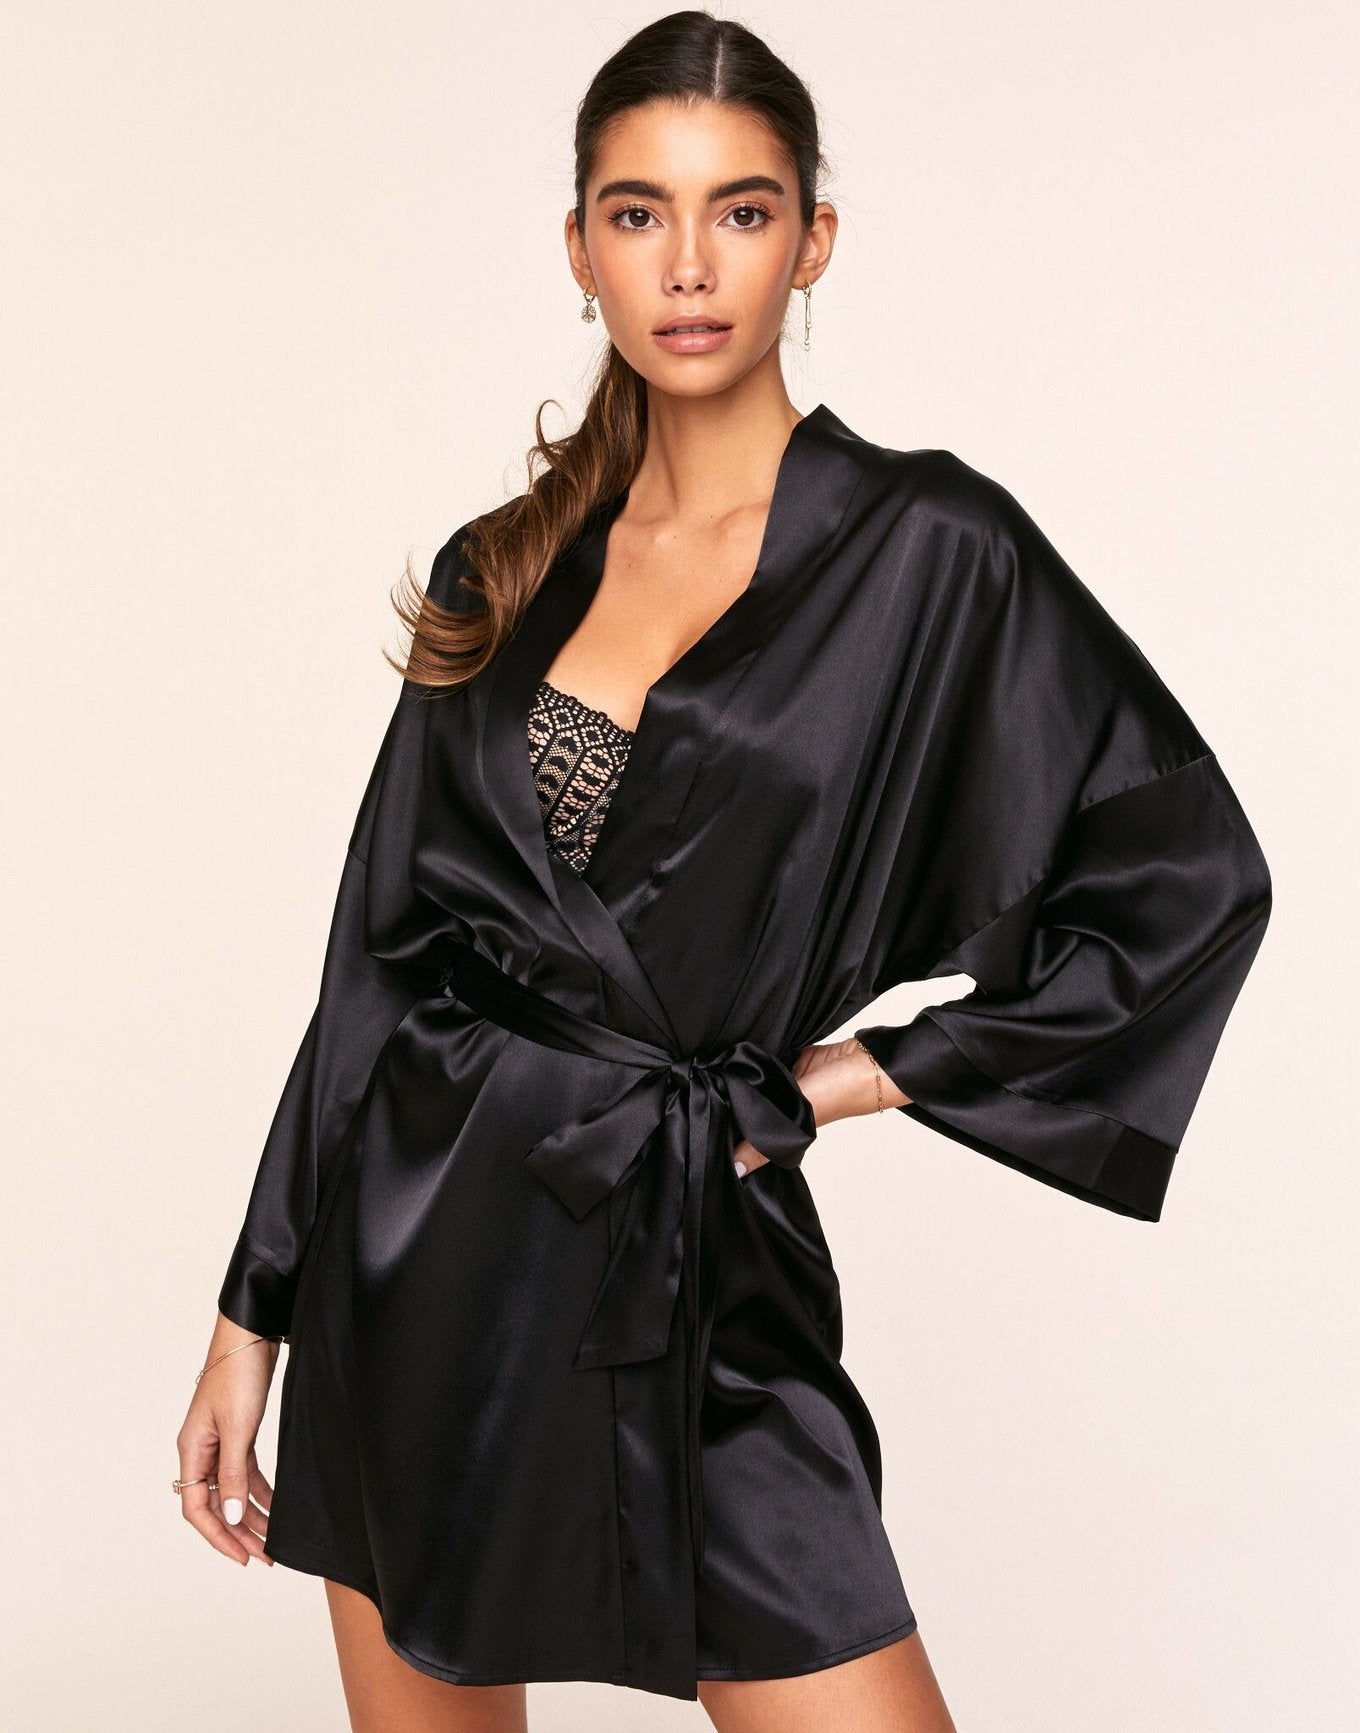 Adore Me Romina Kimono Robe in color Jet Black and shape robe